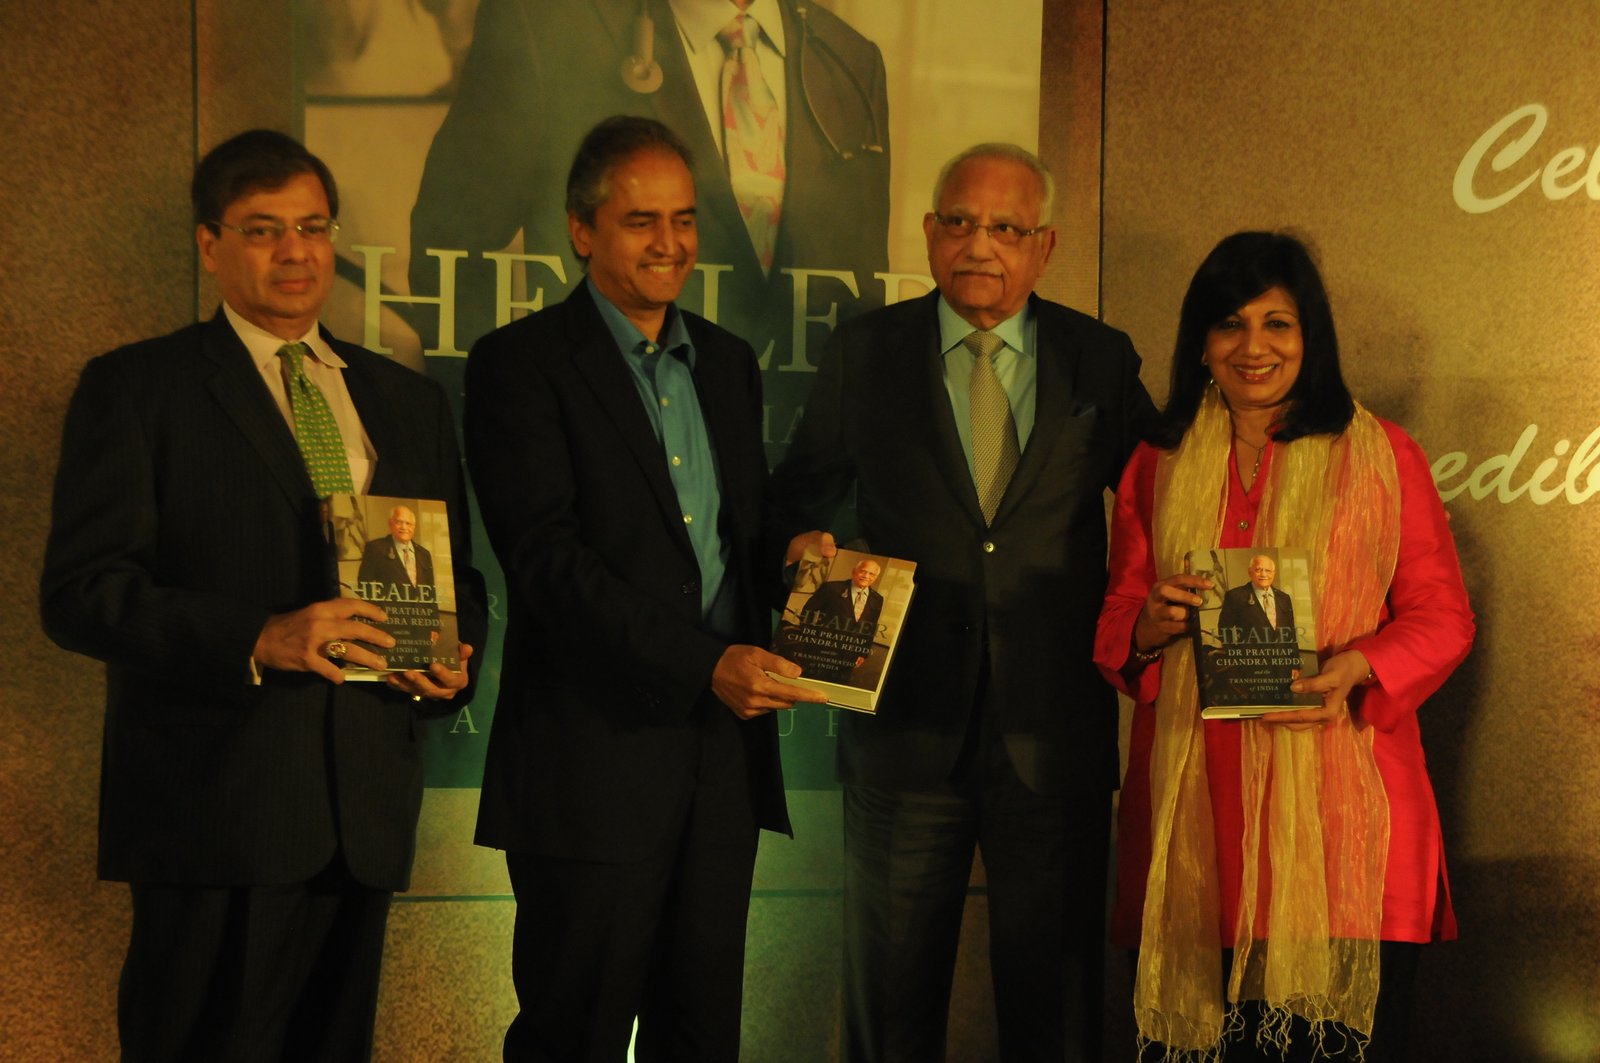 A royal touch: (L-R) Mr Pranay Gupte, Dr Devi Shetty, Dr Prathap C Reddy, and Dr Kiran Mazumdar-Shaw